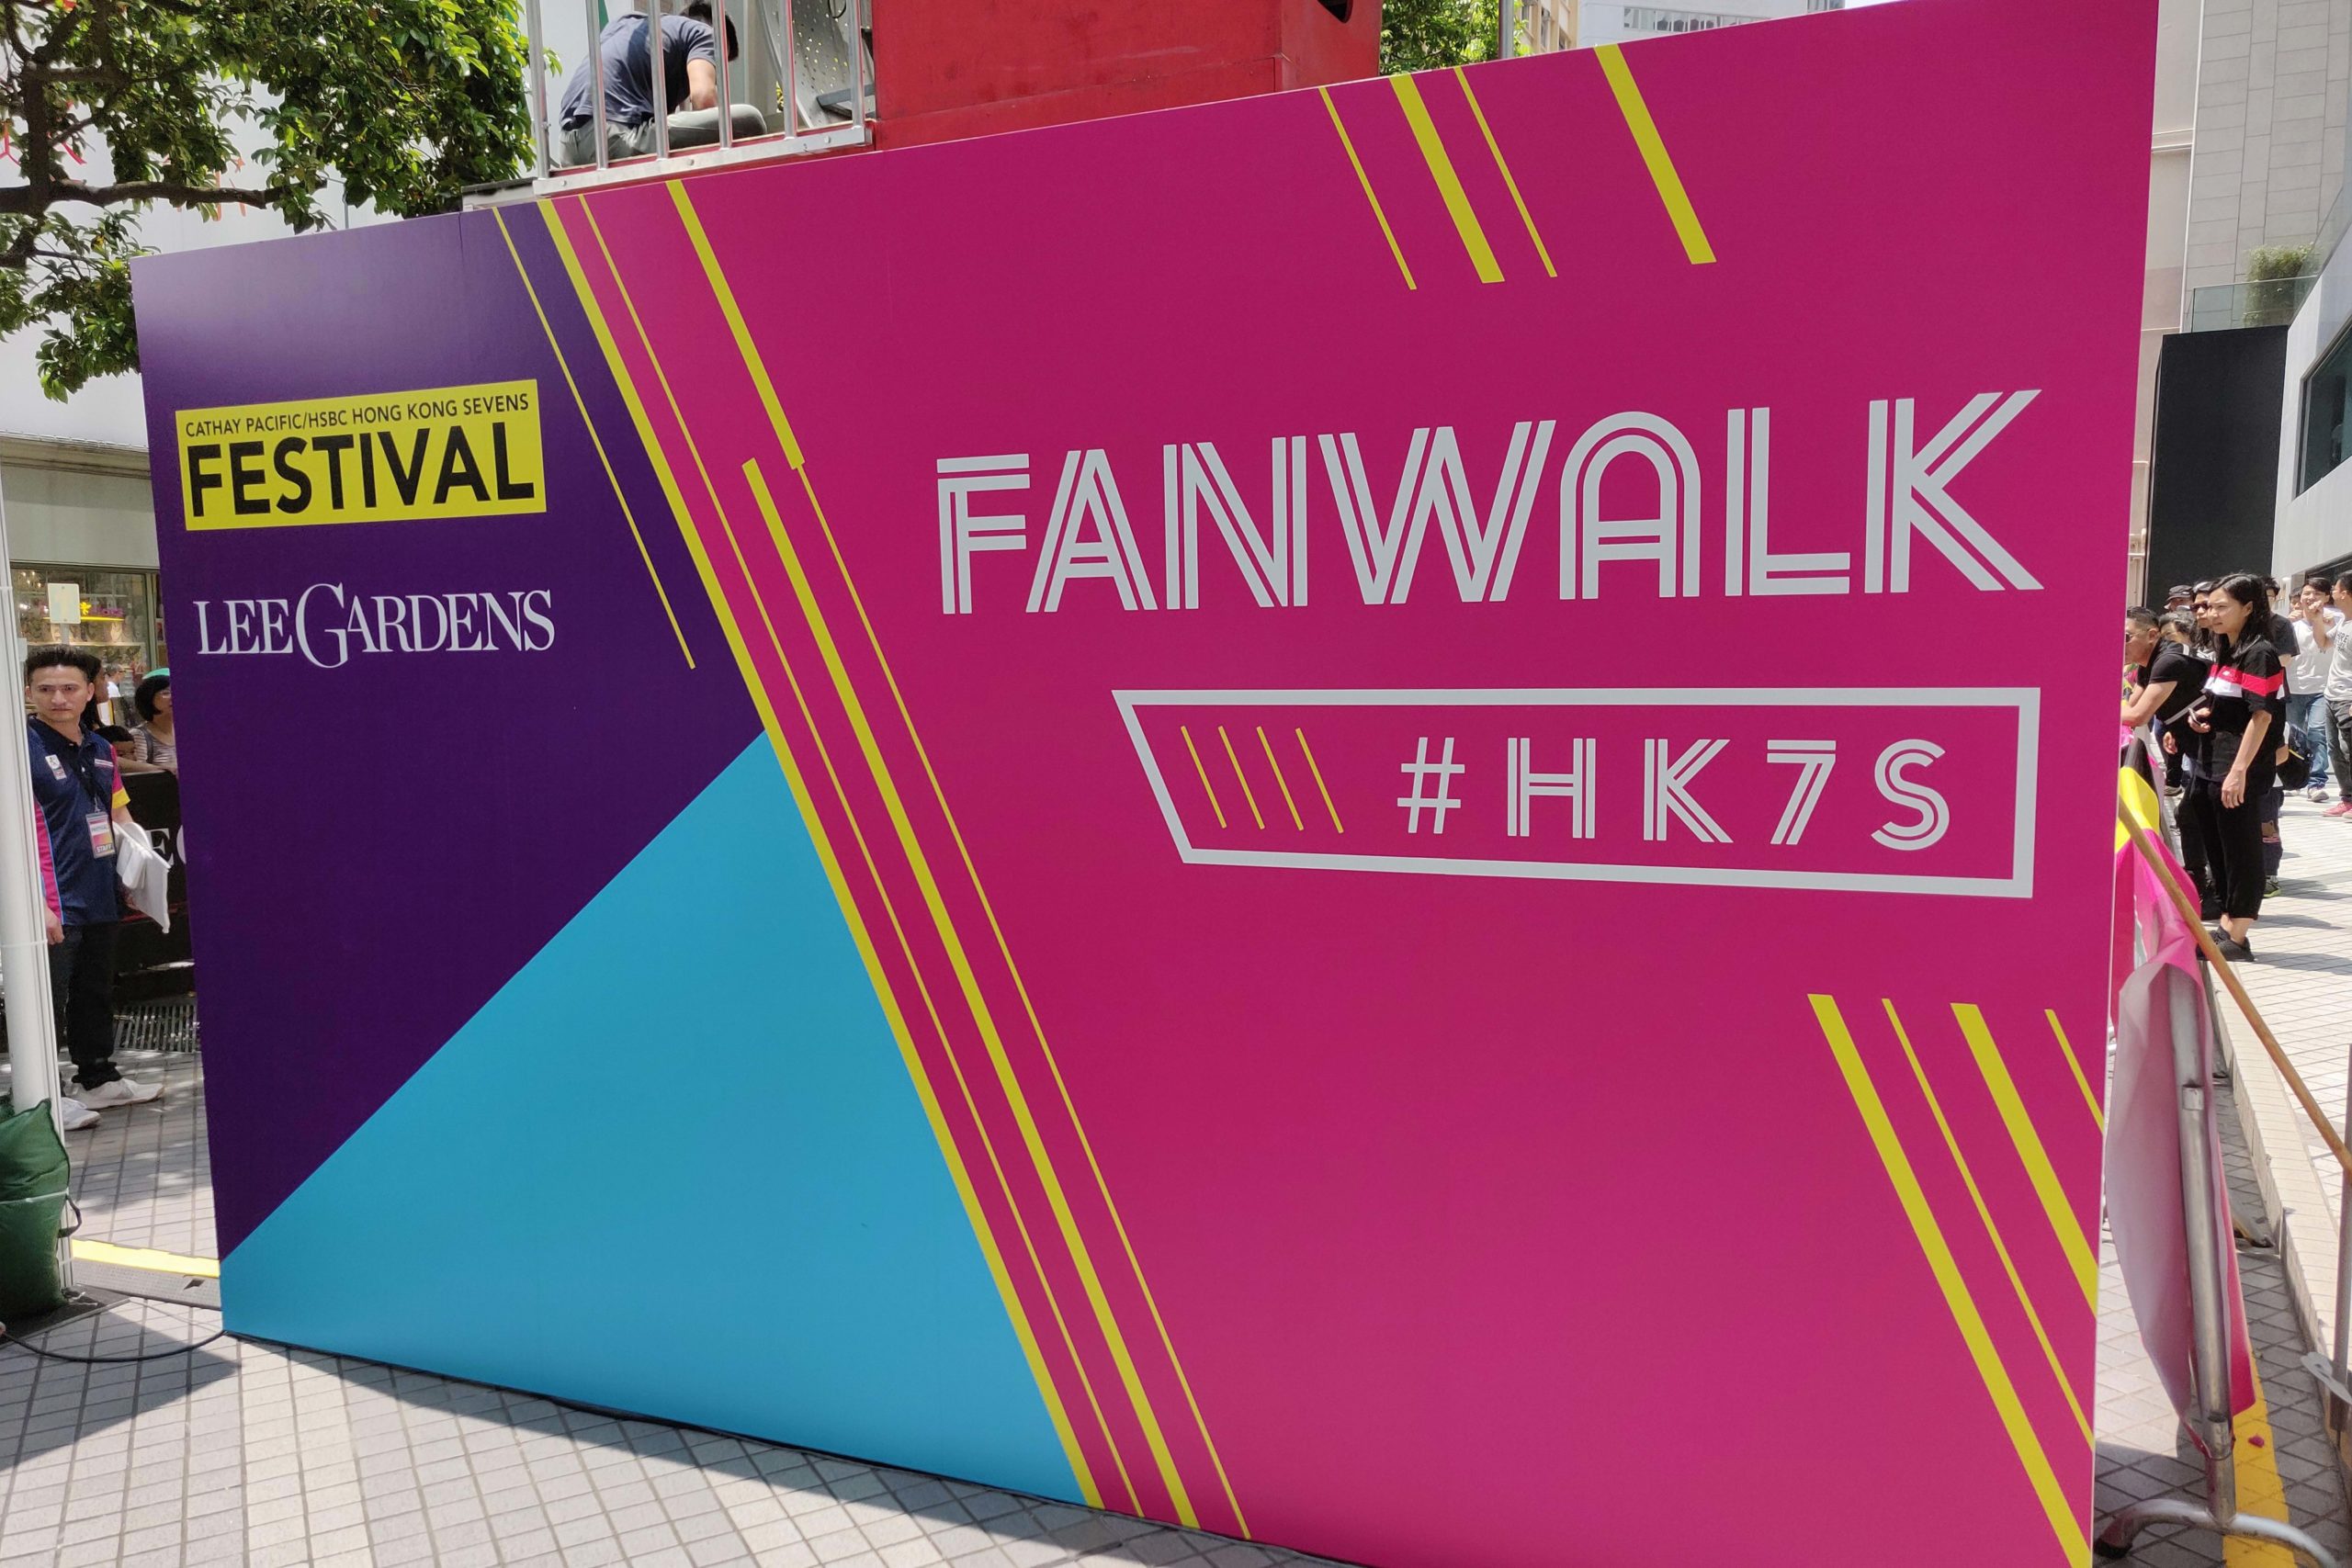 Hong Kong Sevens Festival Events Branding Marketing 2019 Lee Garden Outdoor Backdrop Design